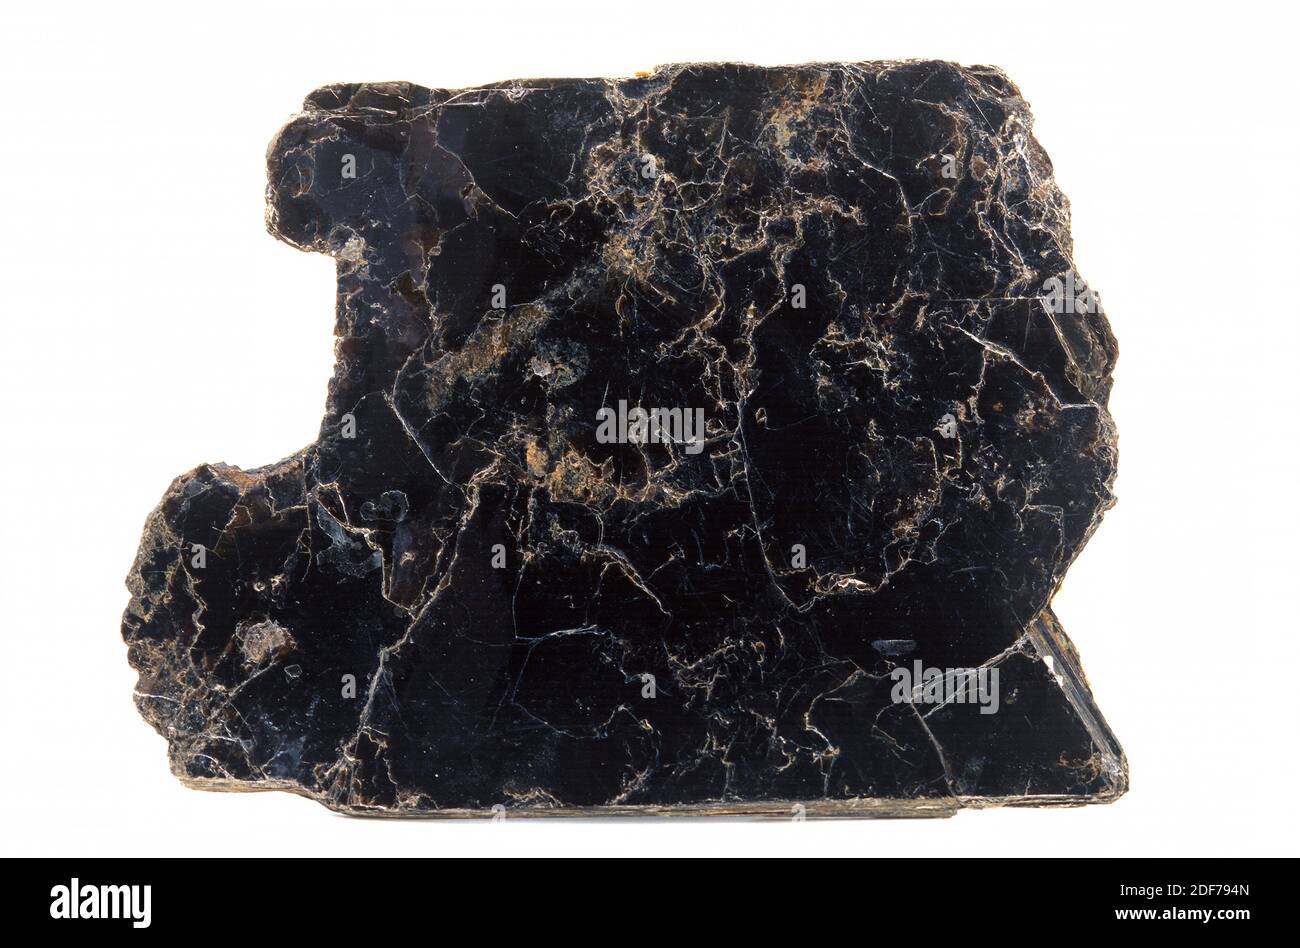 La biotita es un mineral de silicato del grupo de la mica. Muestra de hoja. Foto de stock